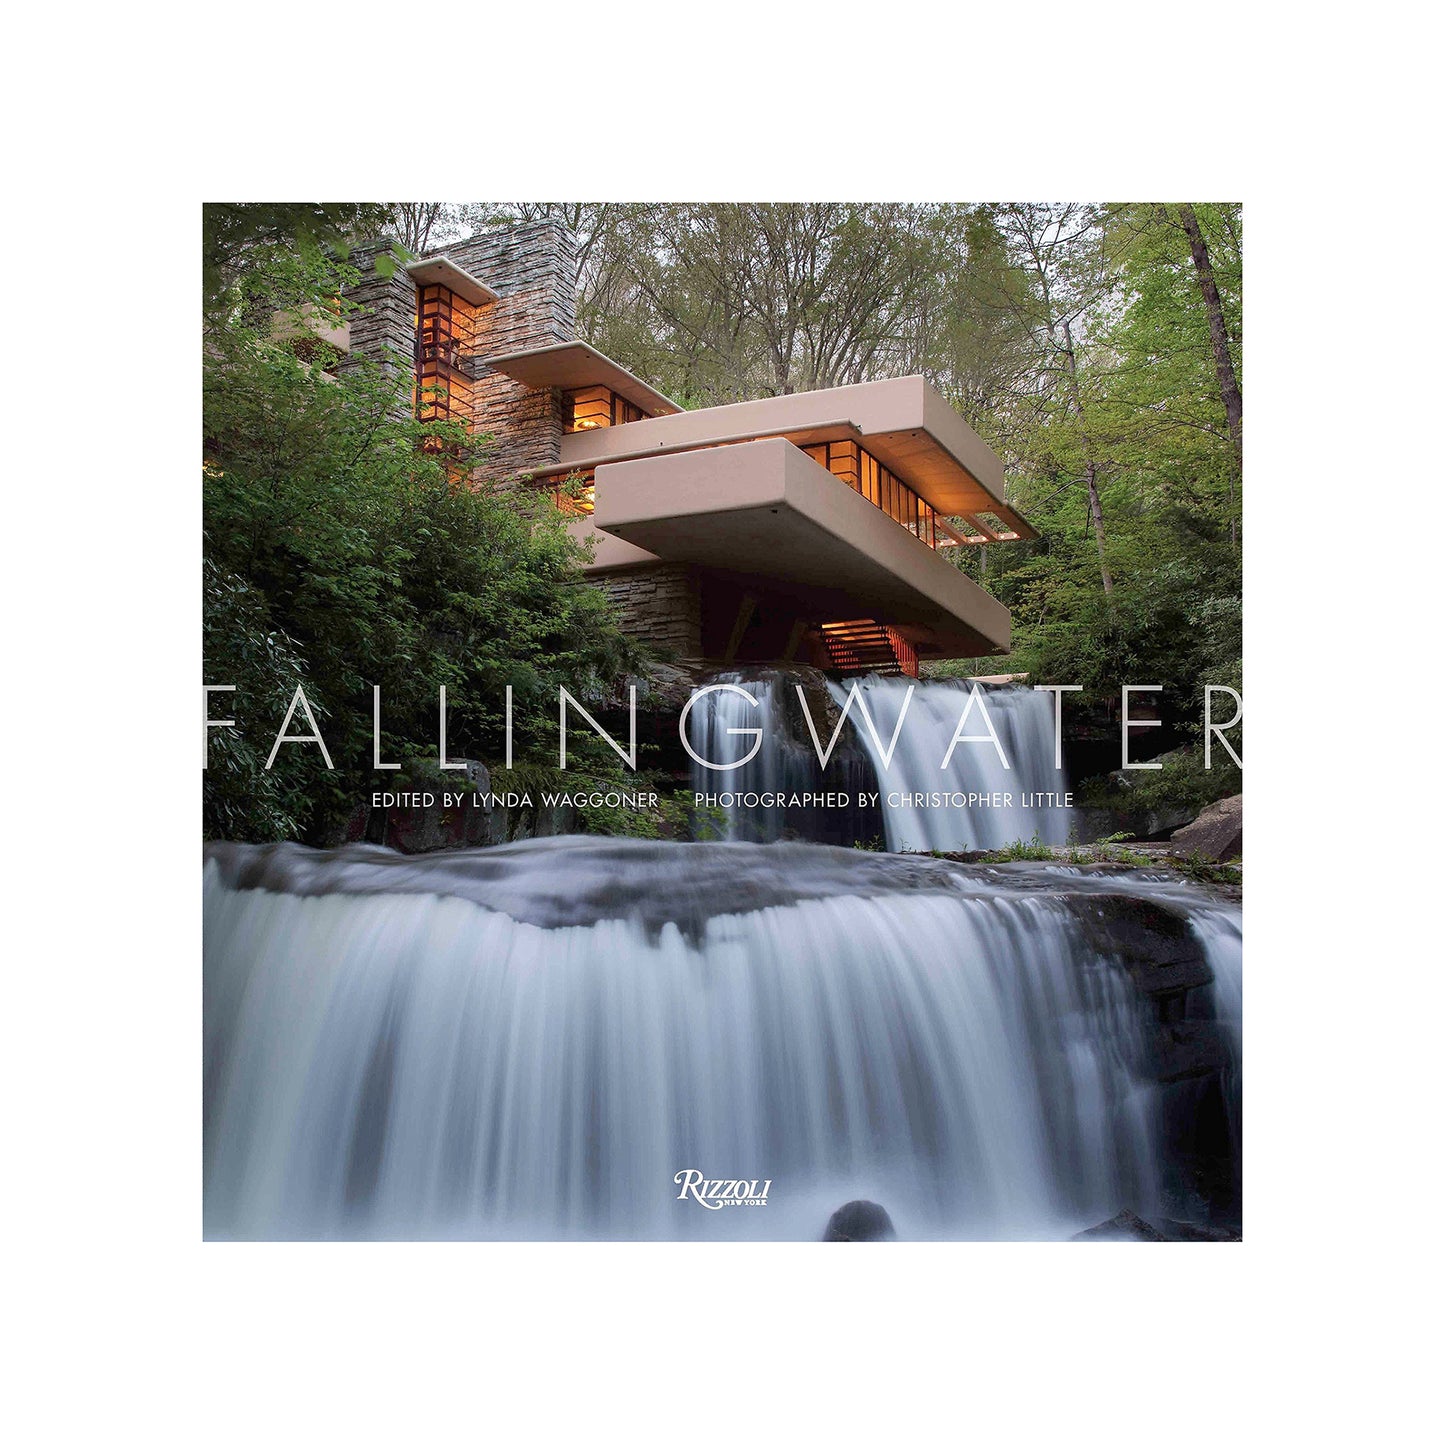 Fallingwater